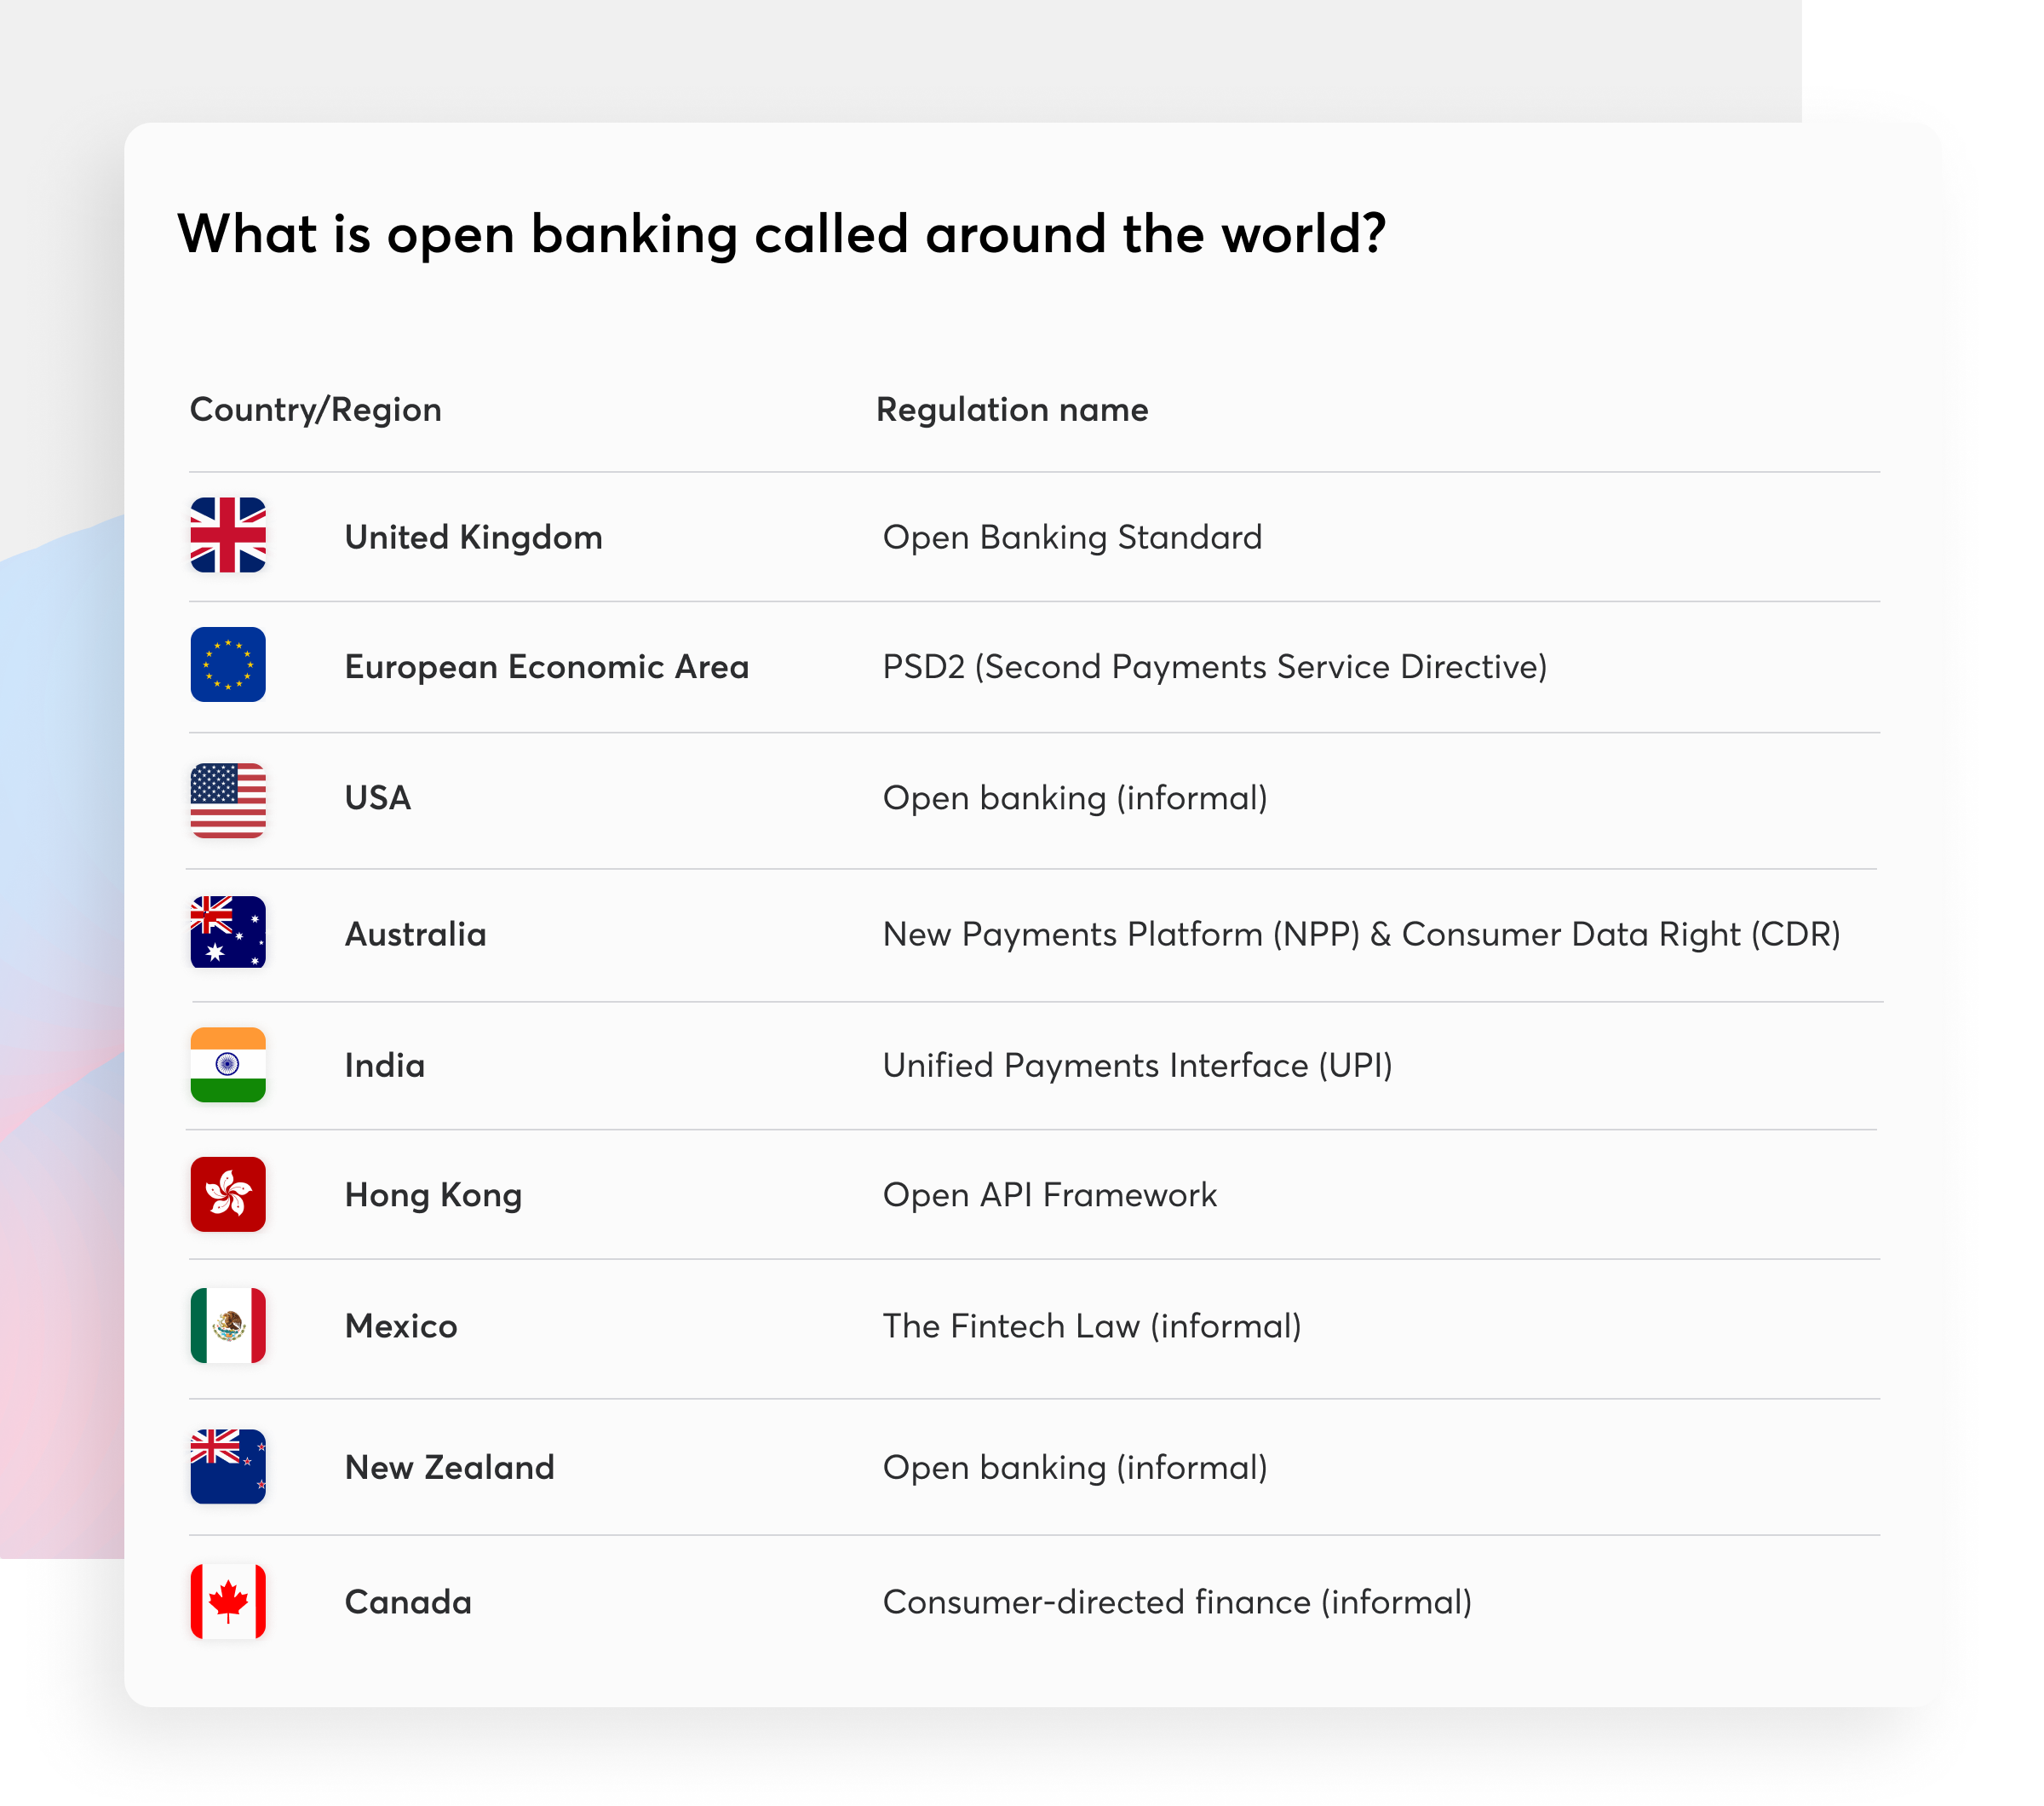 Open banking around the world terminology